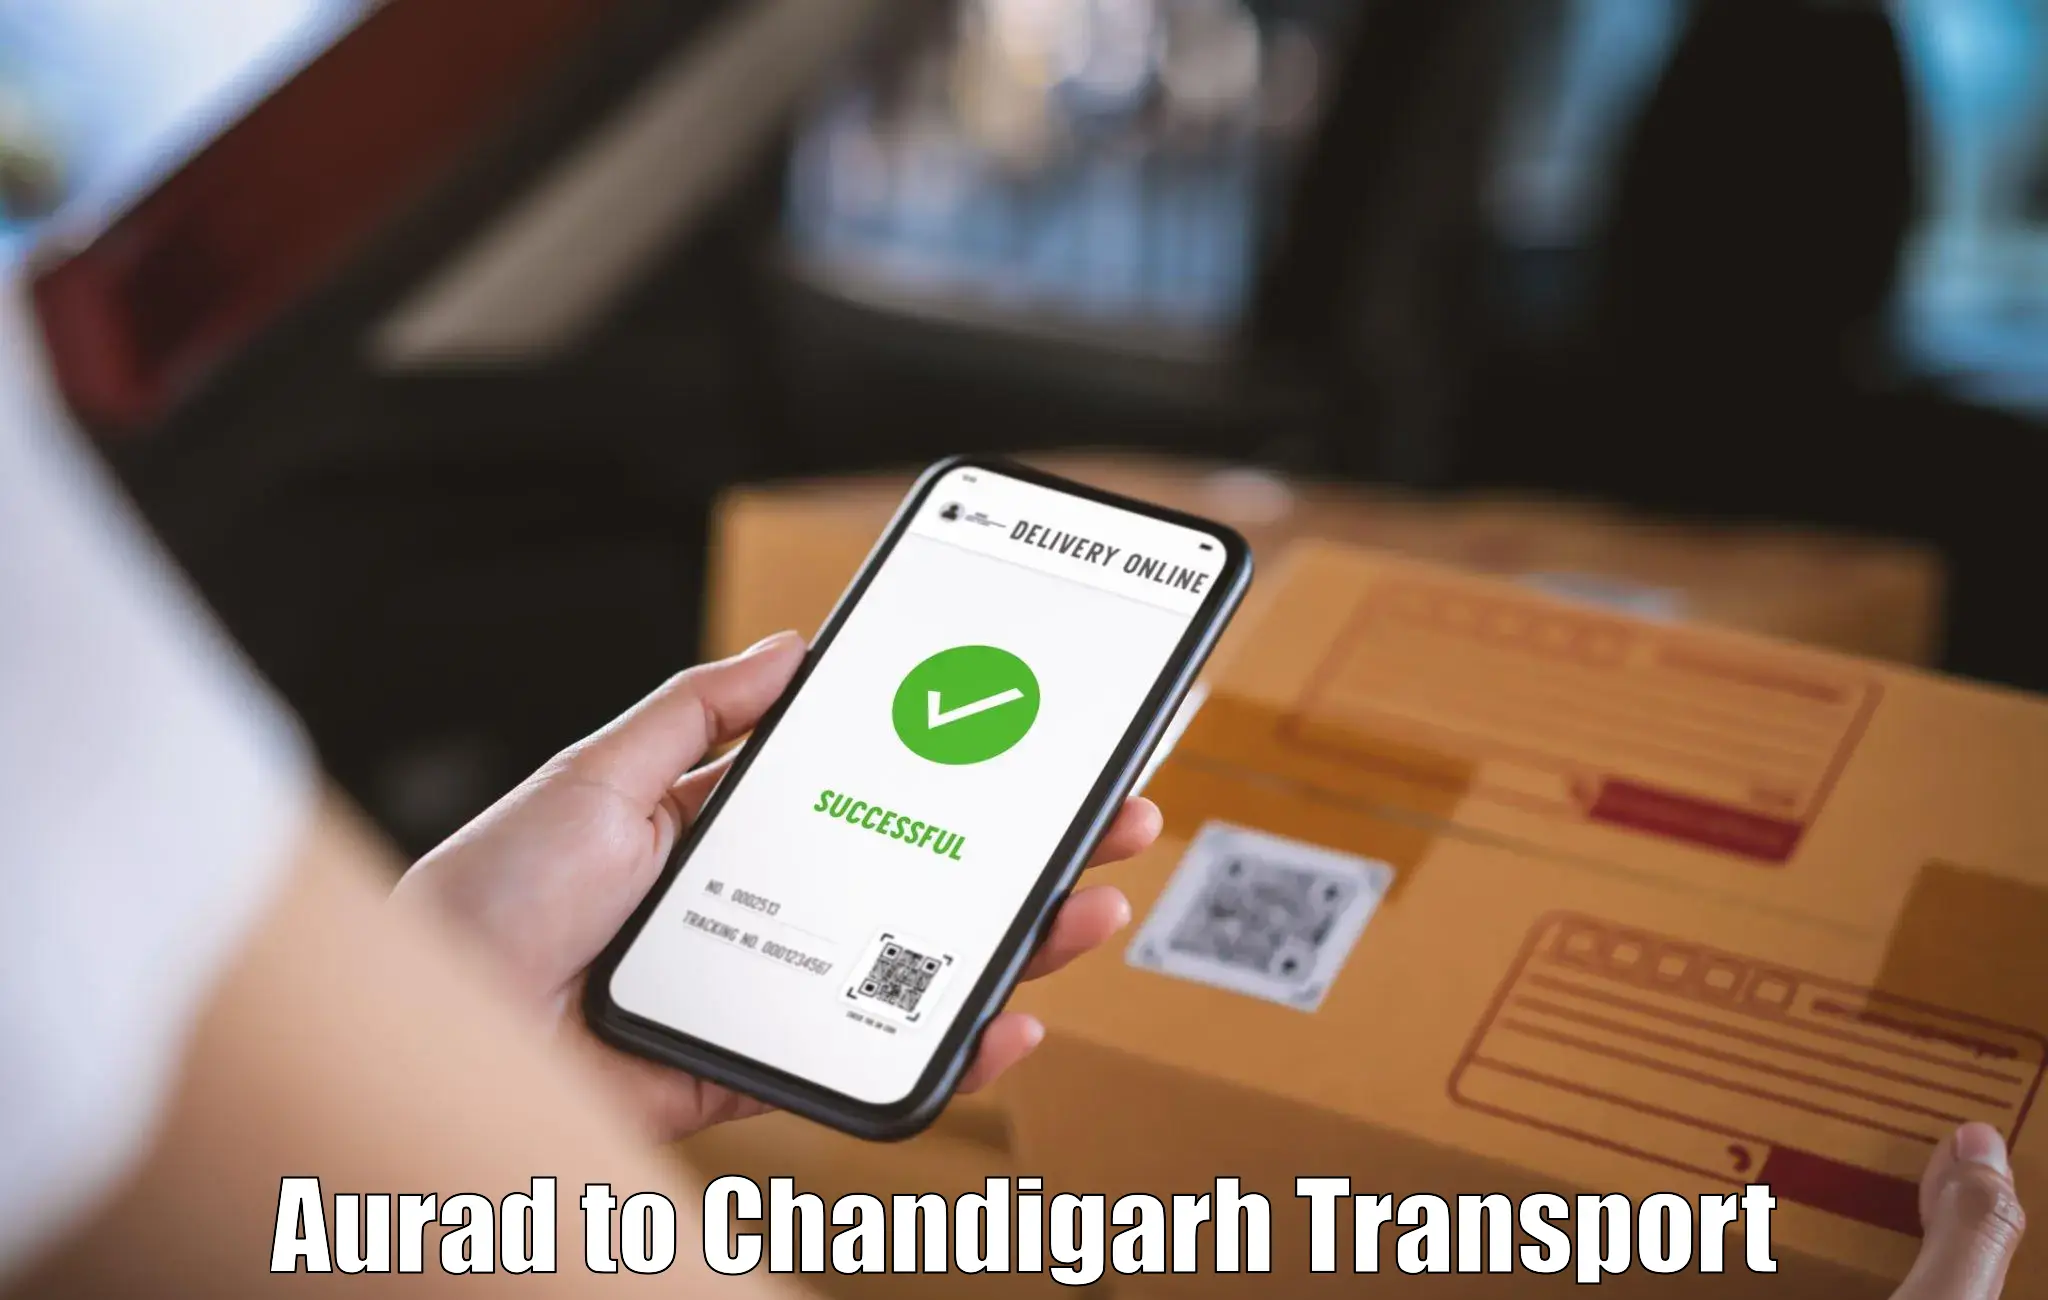 Transport in sharing Aurad to Chandigarh